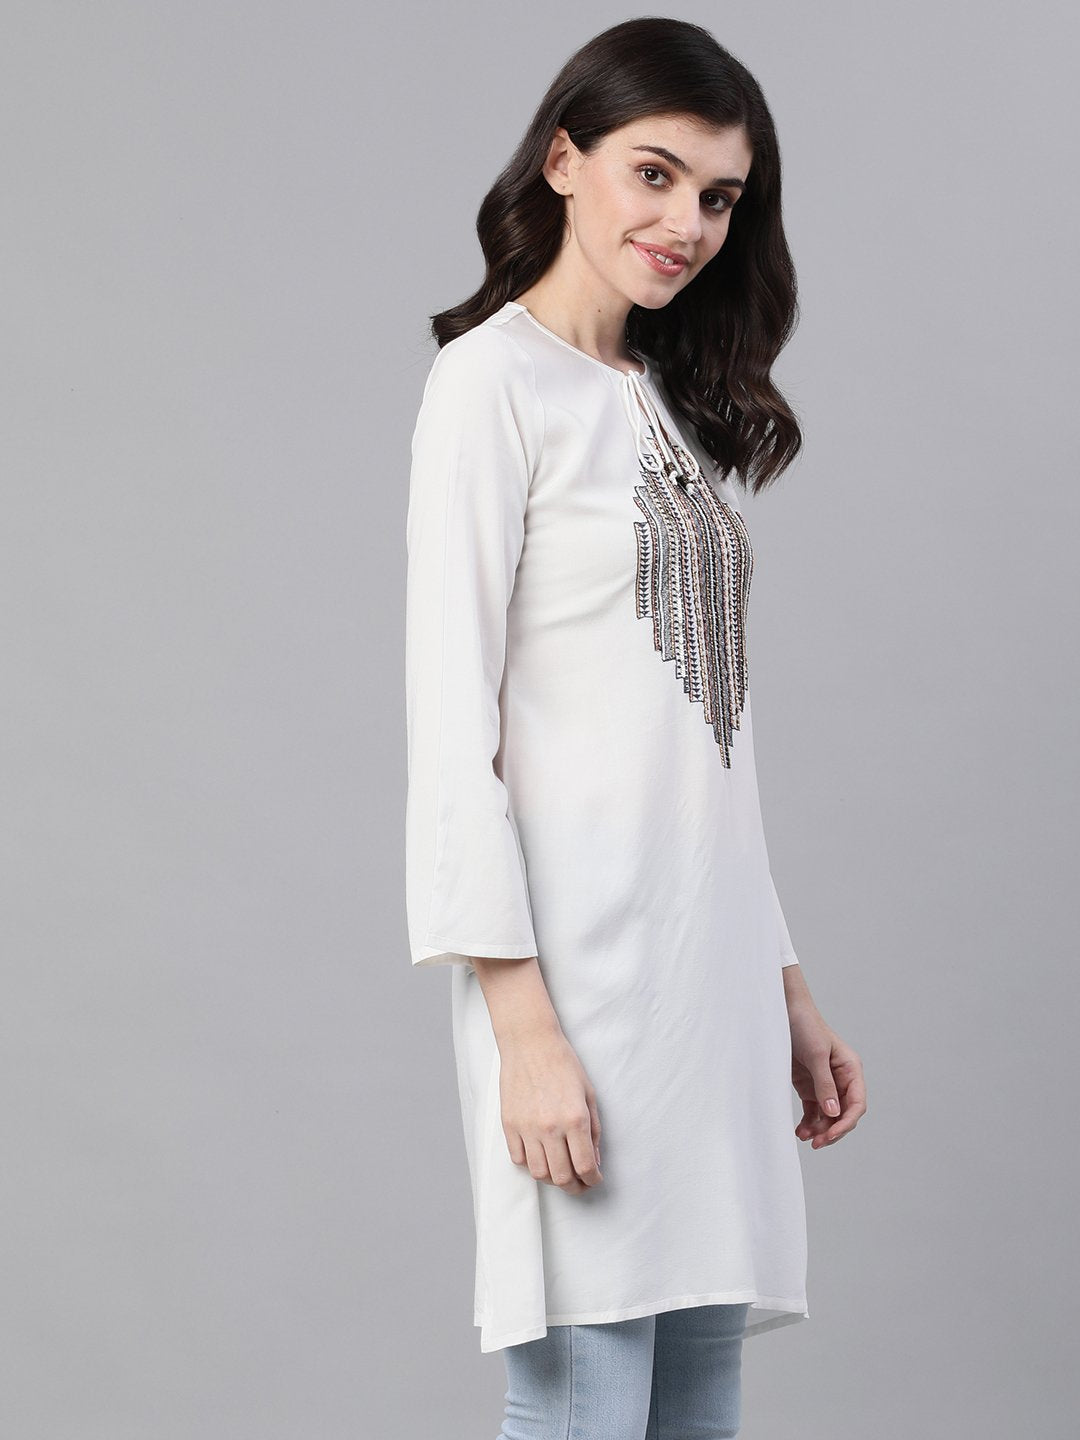 Ishin Women's Rayon Off White Embellished A-Line Dress